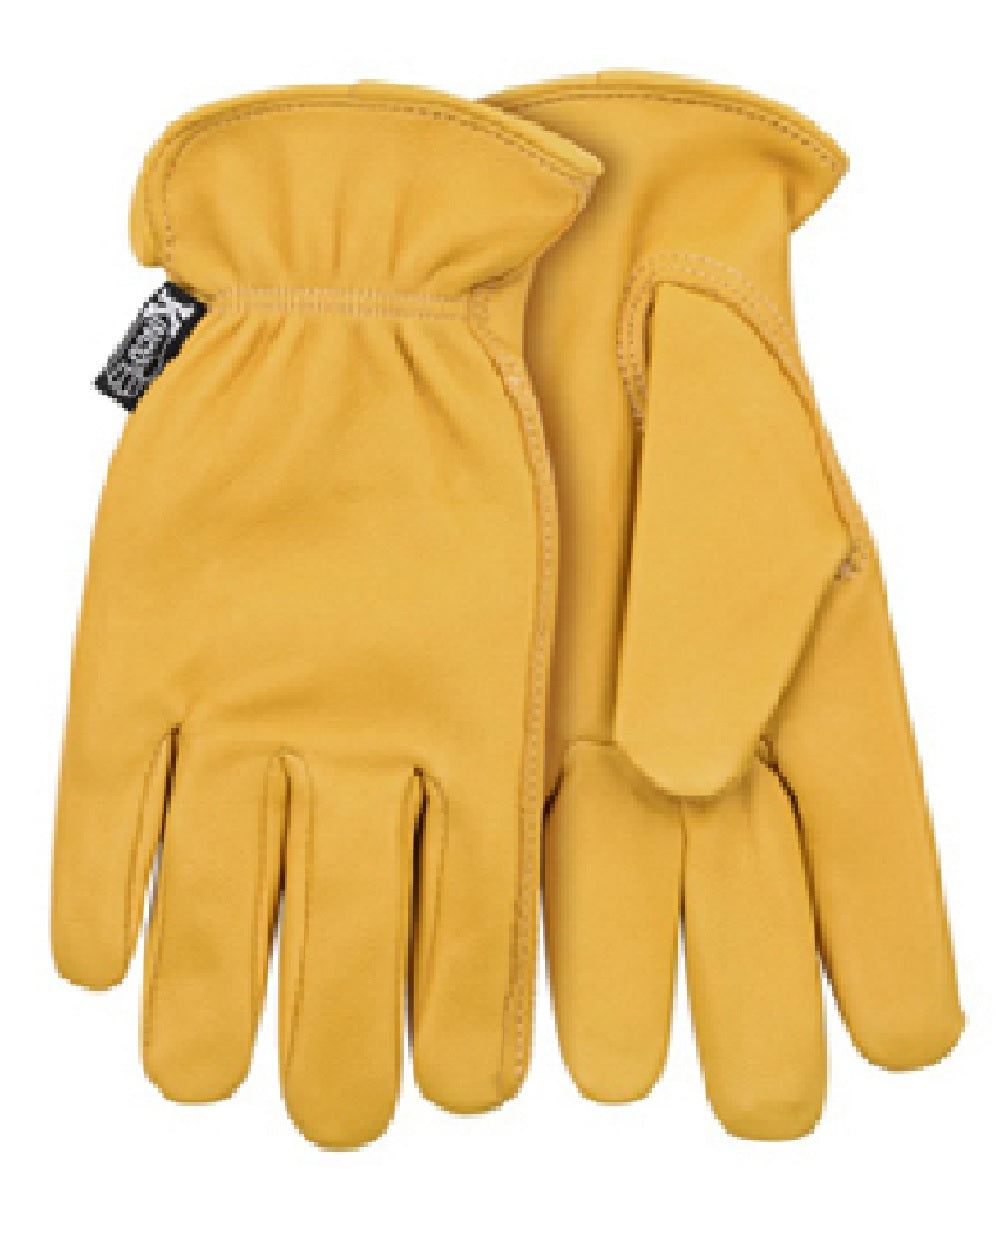 Kinco 90W-S Keystone Thumb Driver Gloves, Gold